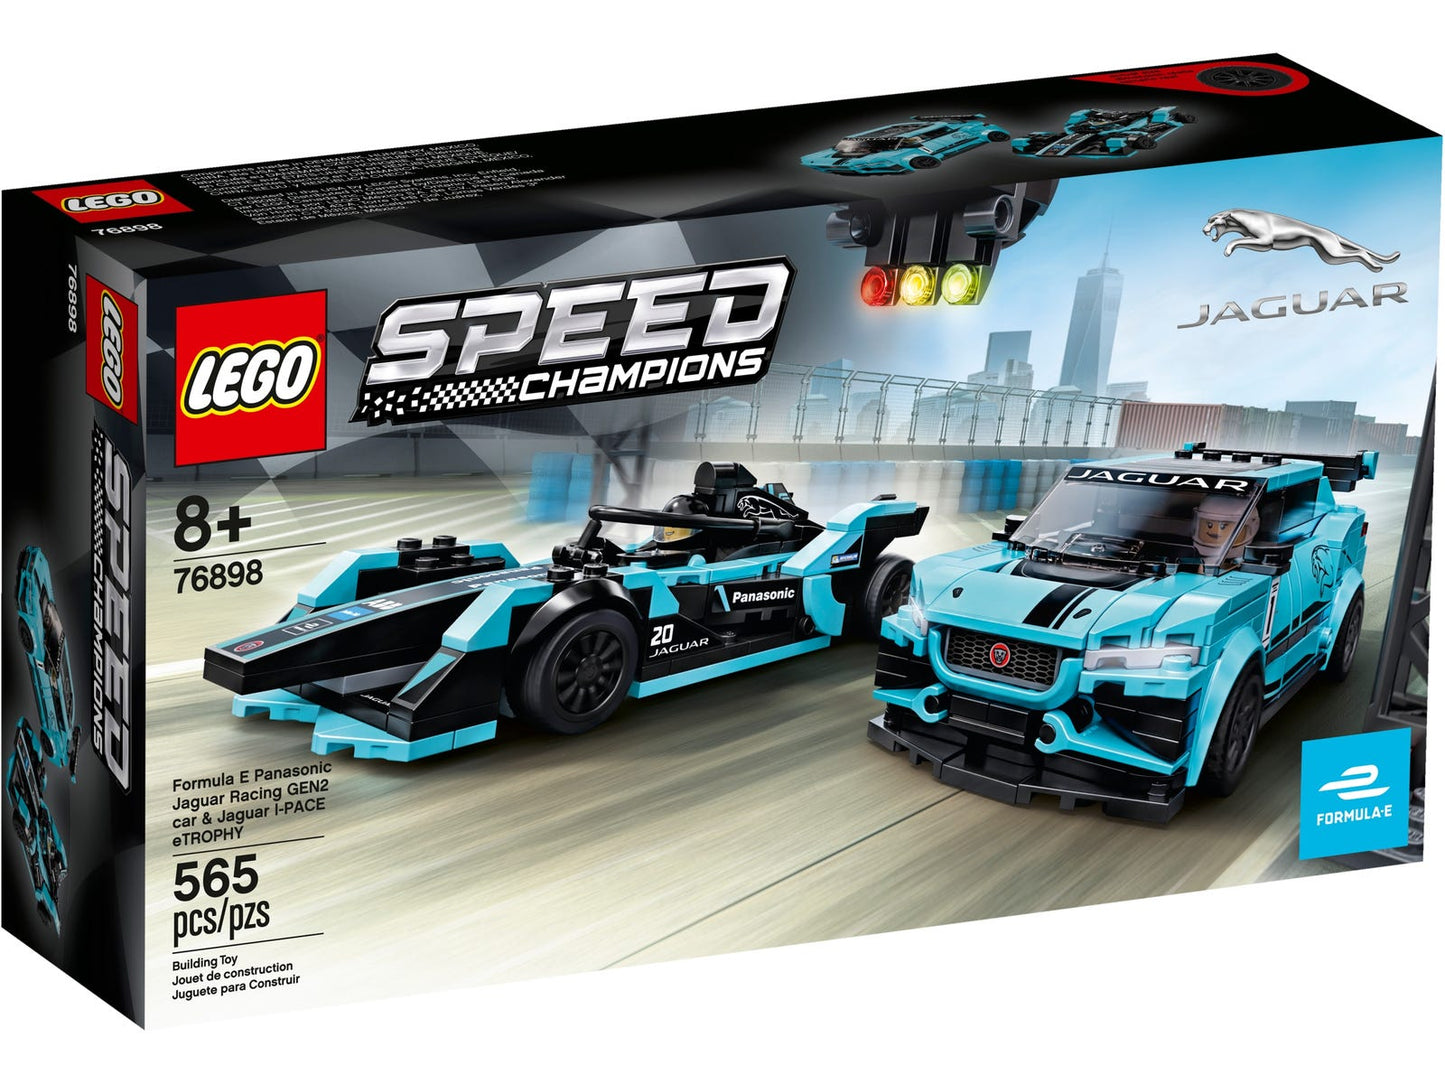 Lego Speed Champions Jaguar Formula E & I-Pace SV Race Car 76898